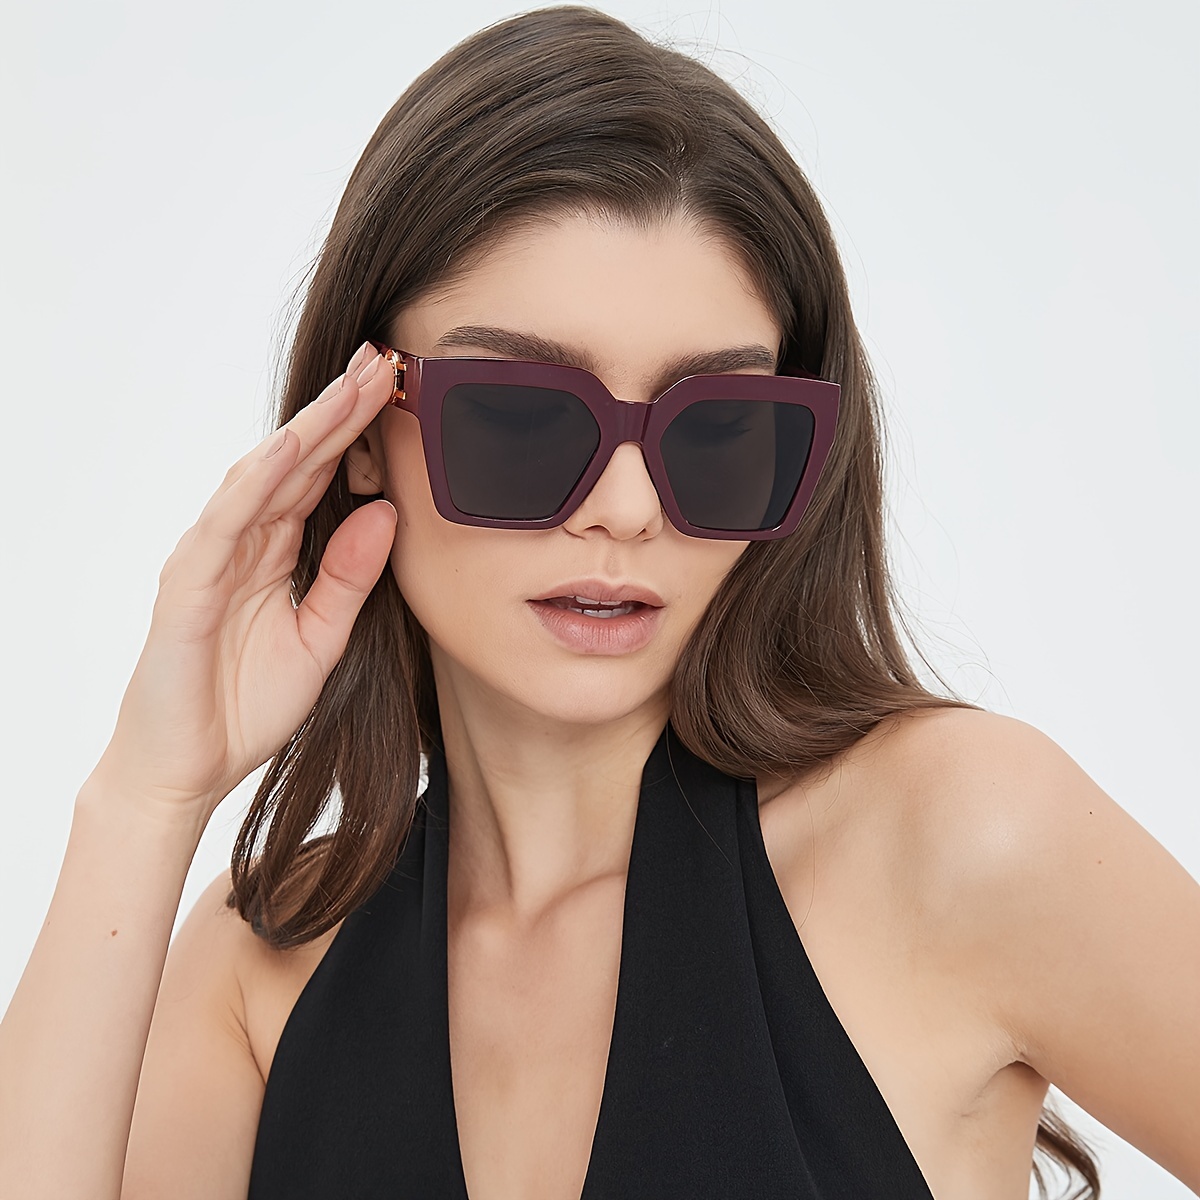 

Hollow Temple Fashion Glasses For Women Men Anti Glare Sun Shades Glasses For Driving Beach Travel